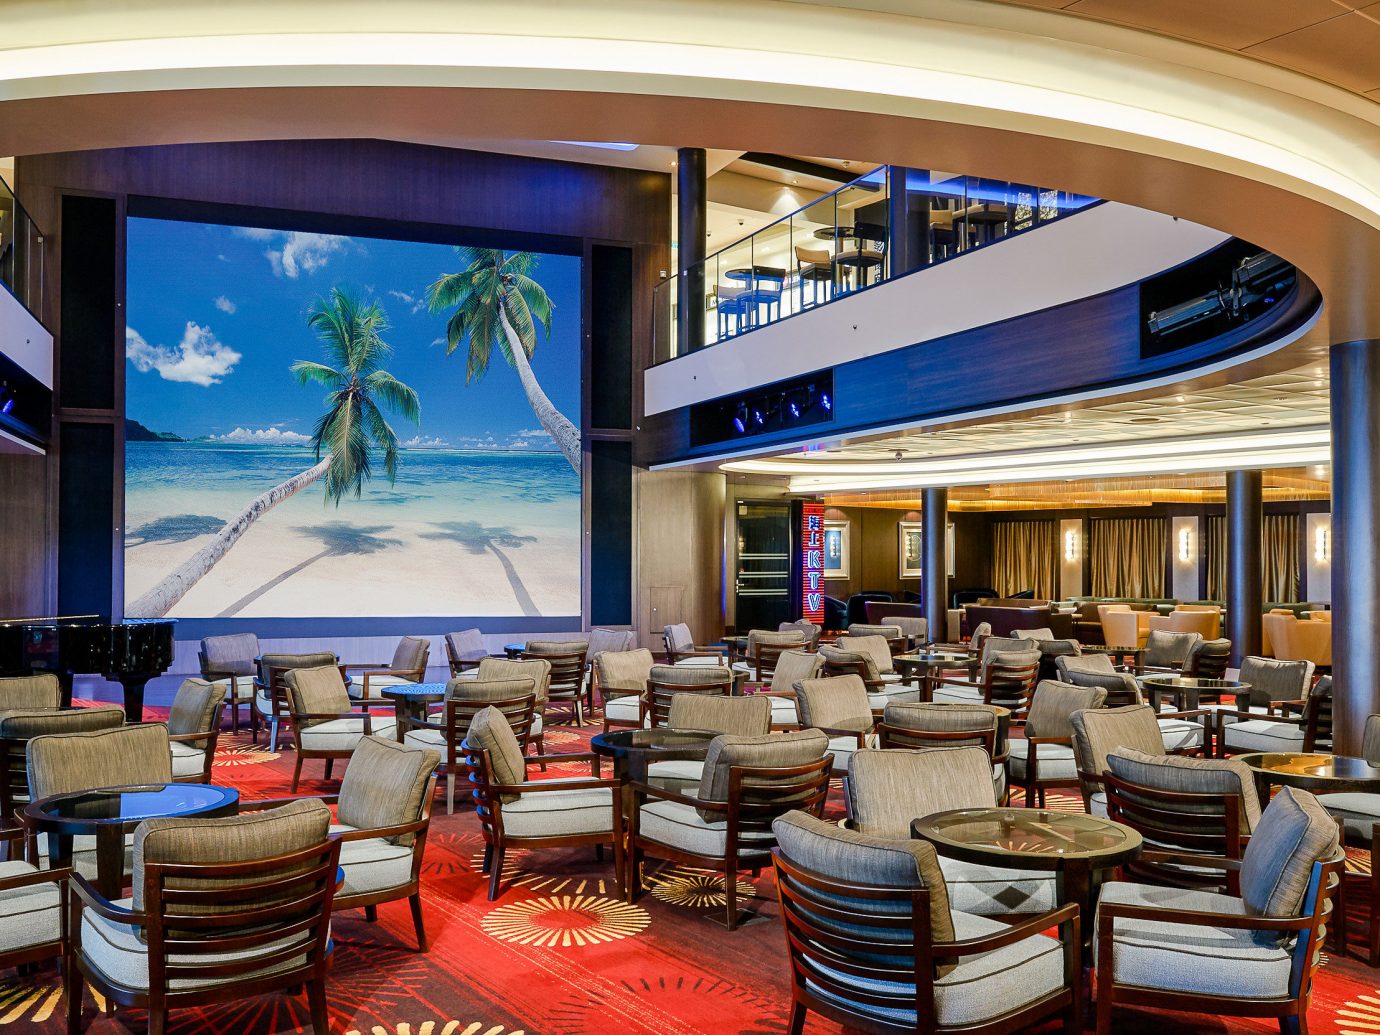 Cruise Travel Luxury Travel Trip Ideas building interior design Lobby restaurant leisure furniture